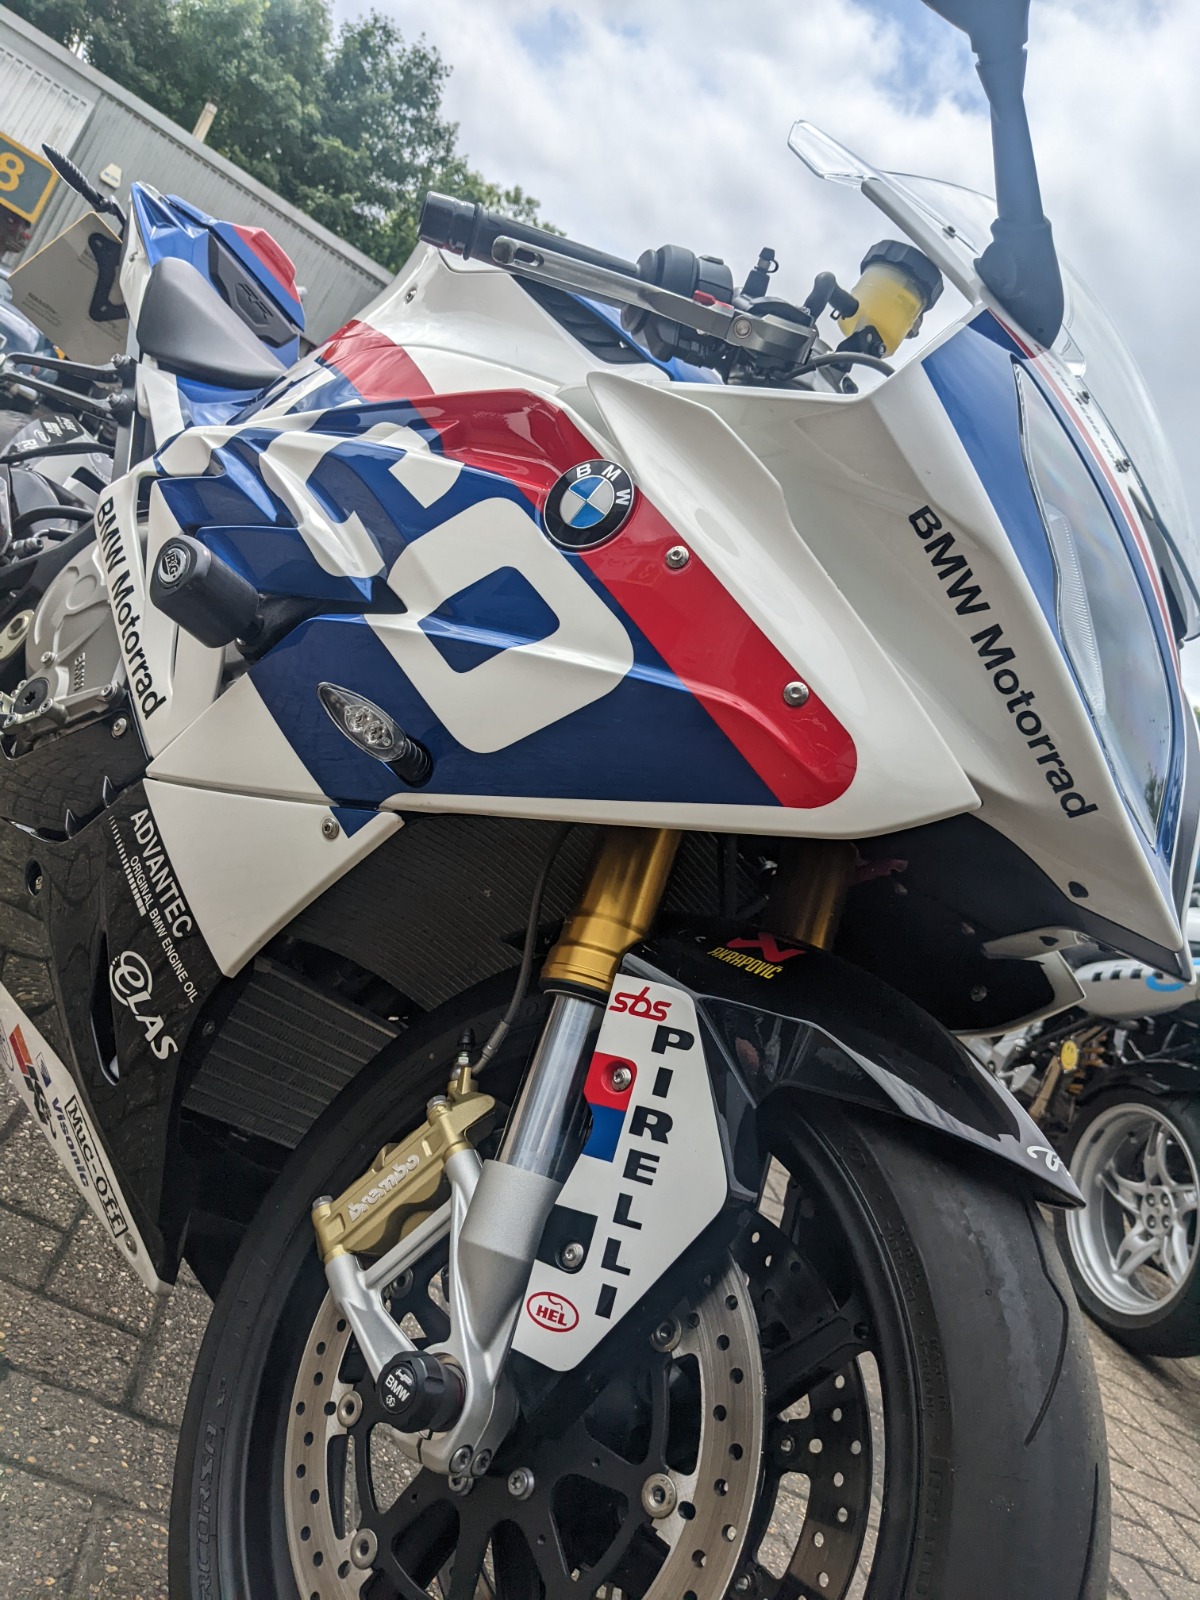 BMW Motorbike Repairs Teddington And West London